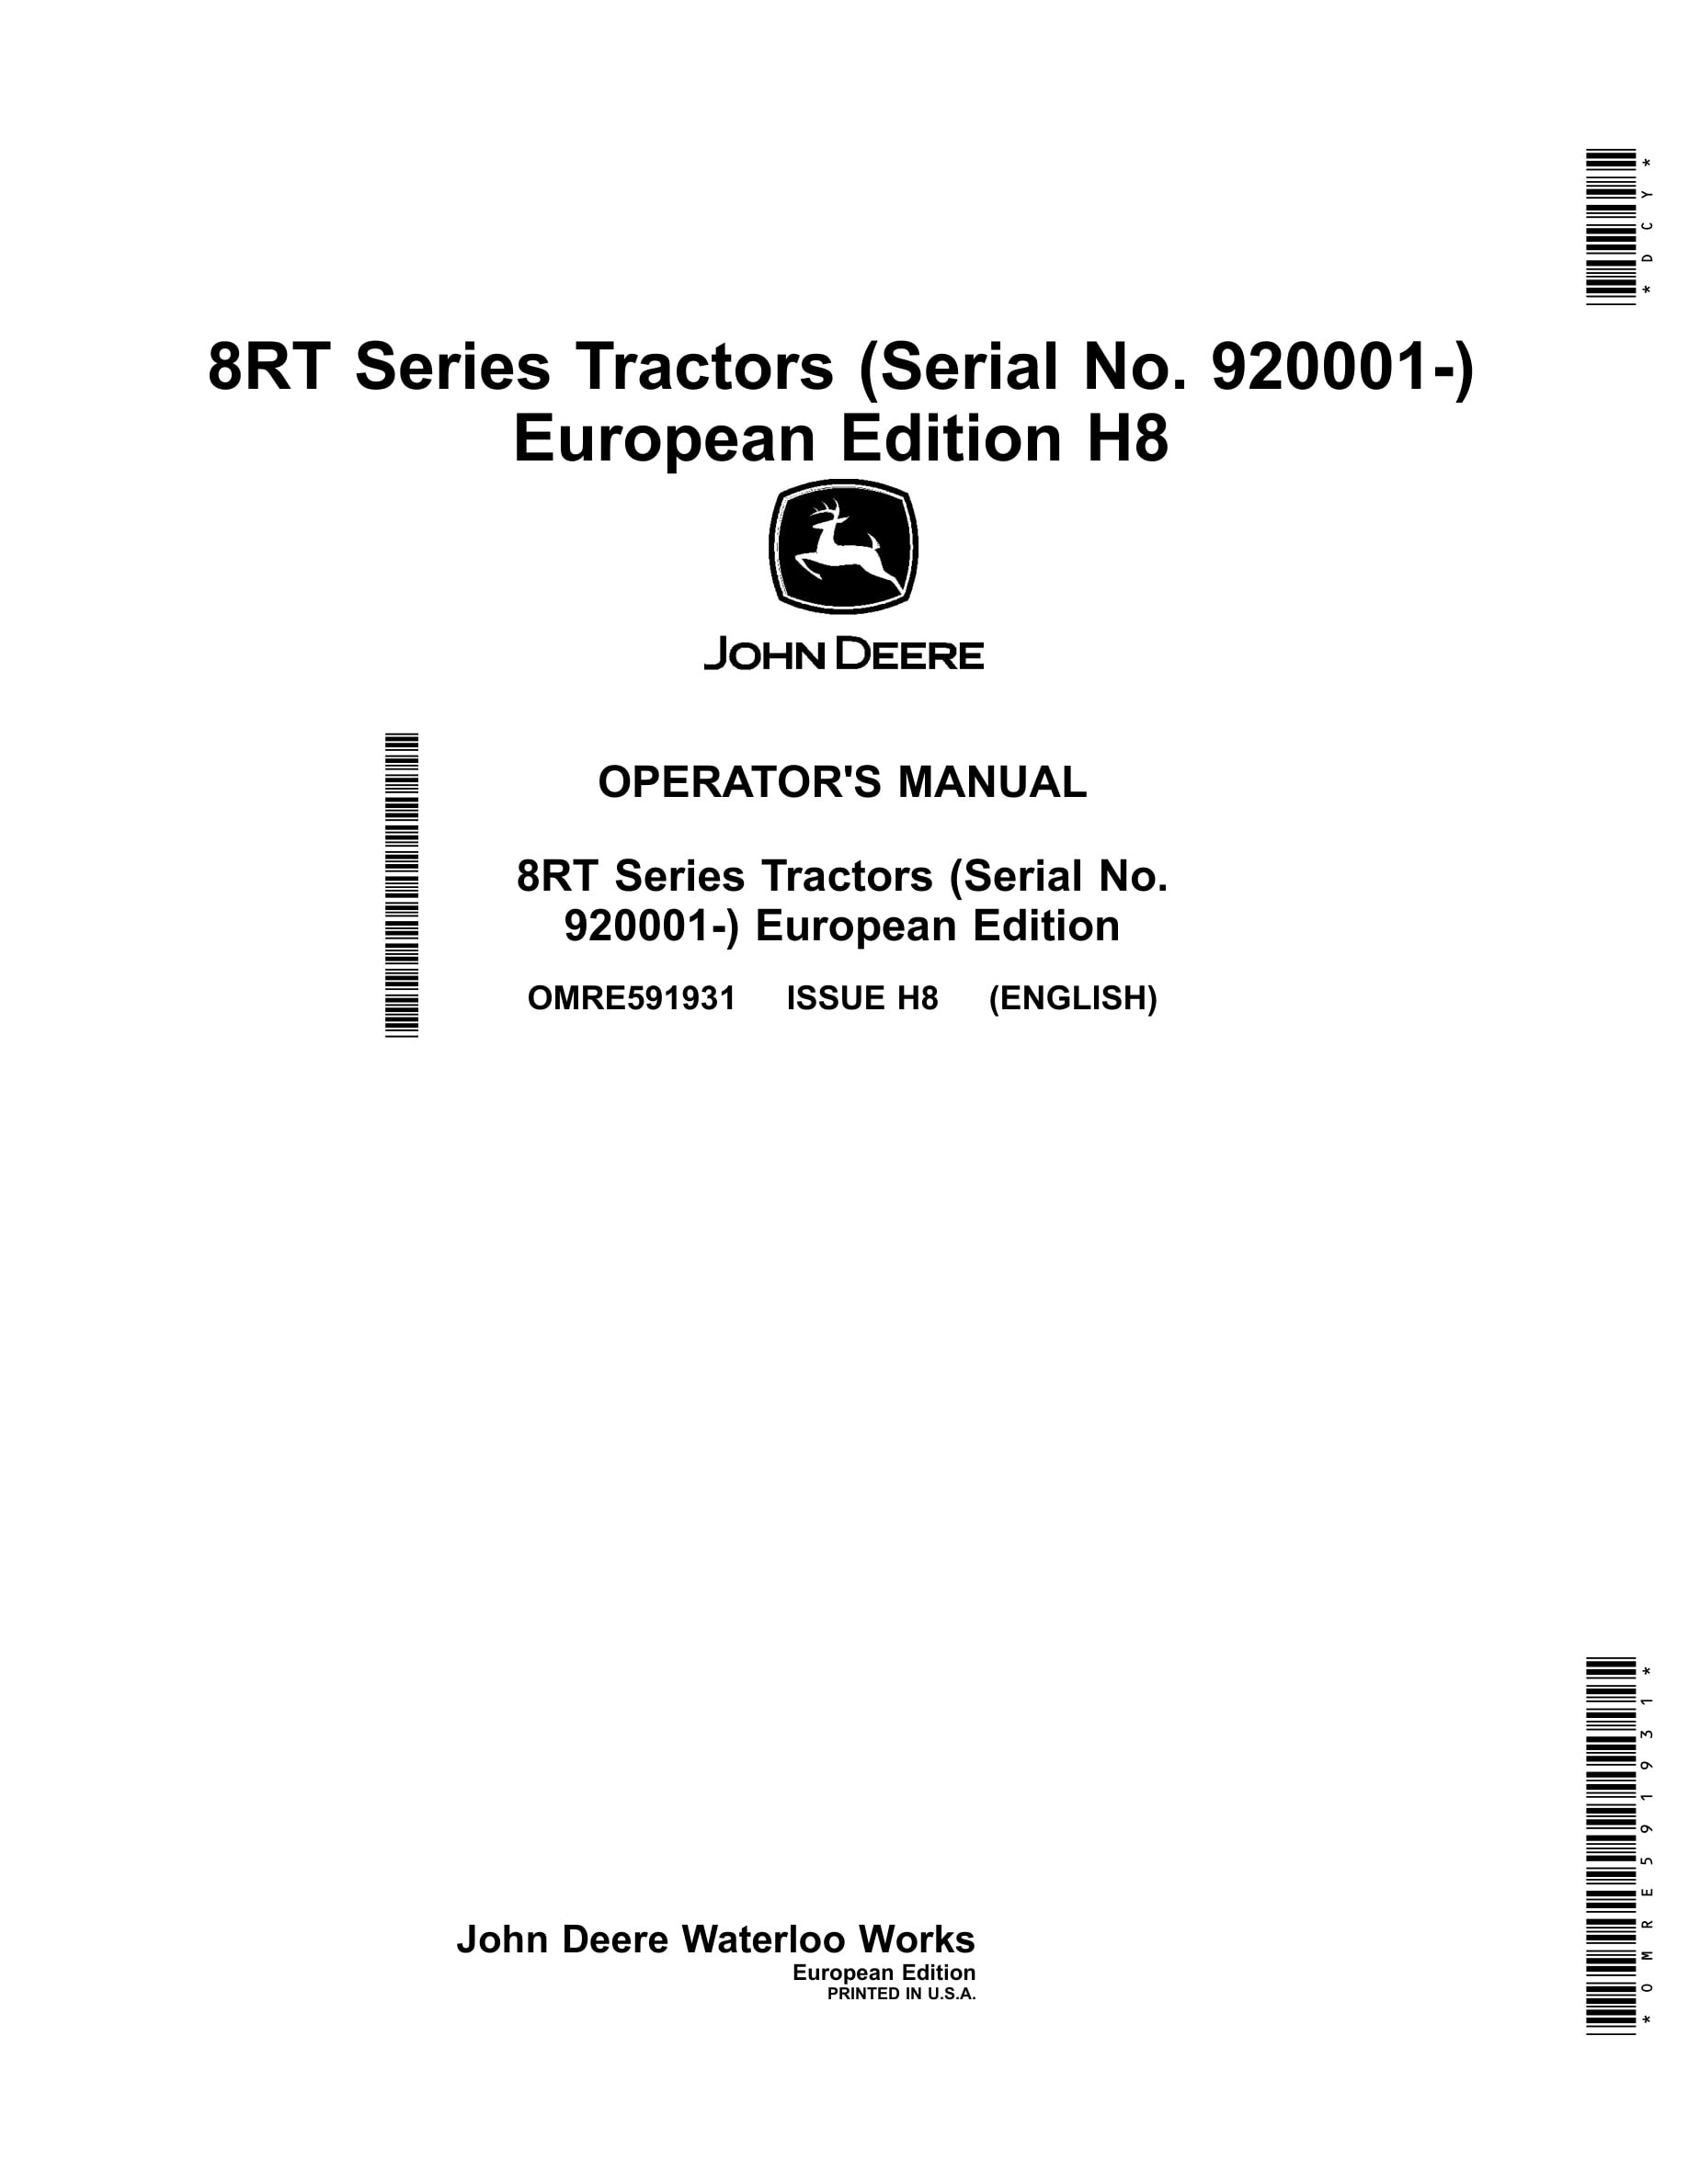 John Deere 8rt Series Tractors Operator Manuals OMRE591931-1